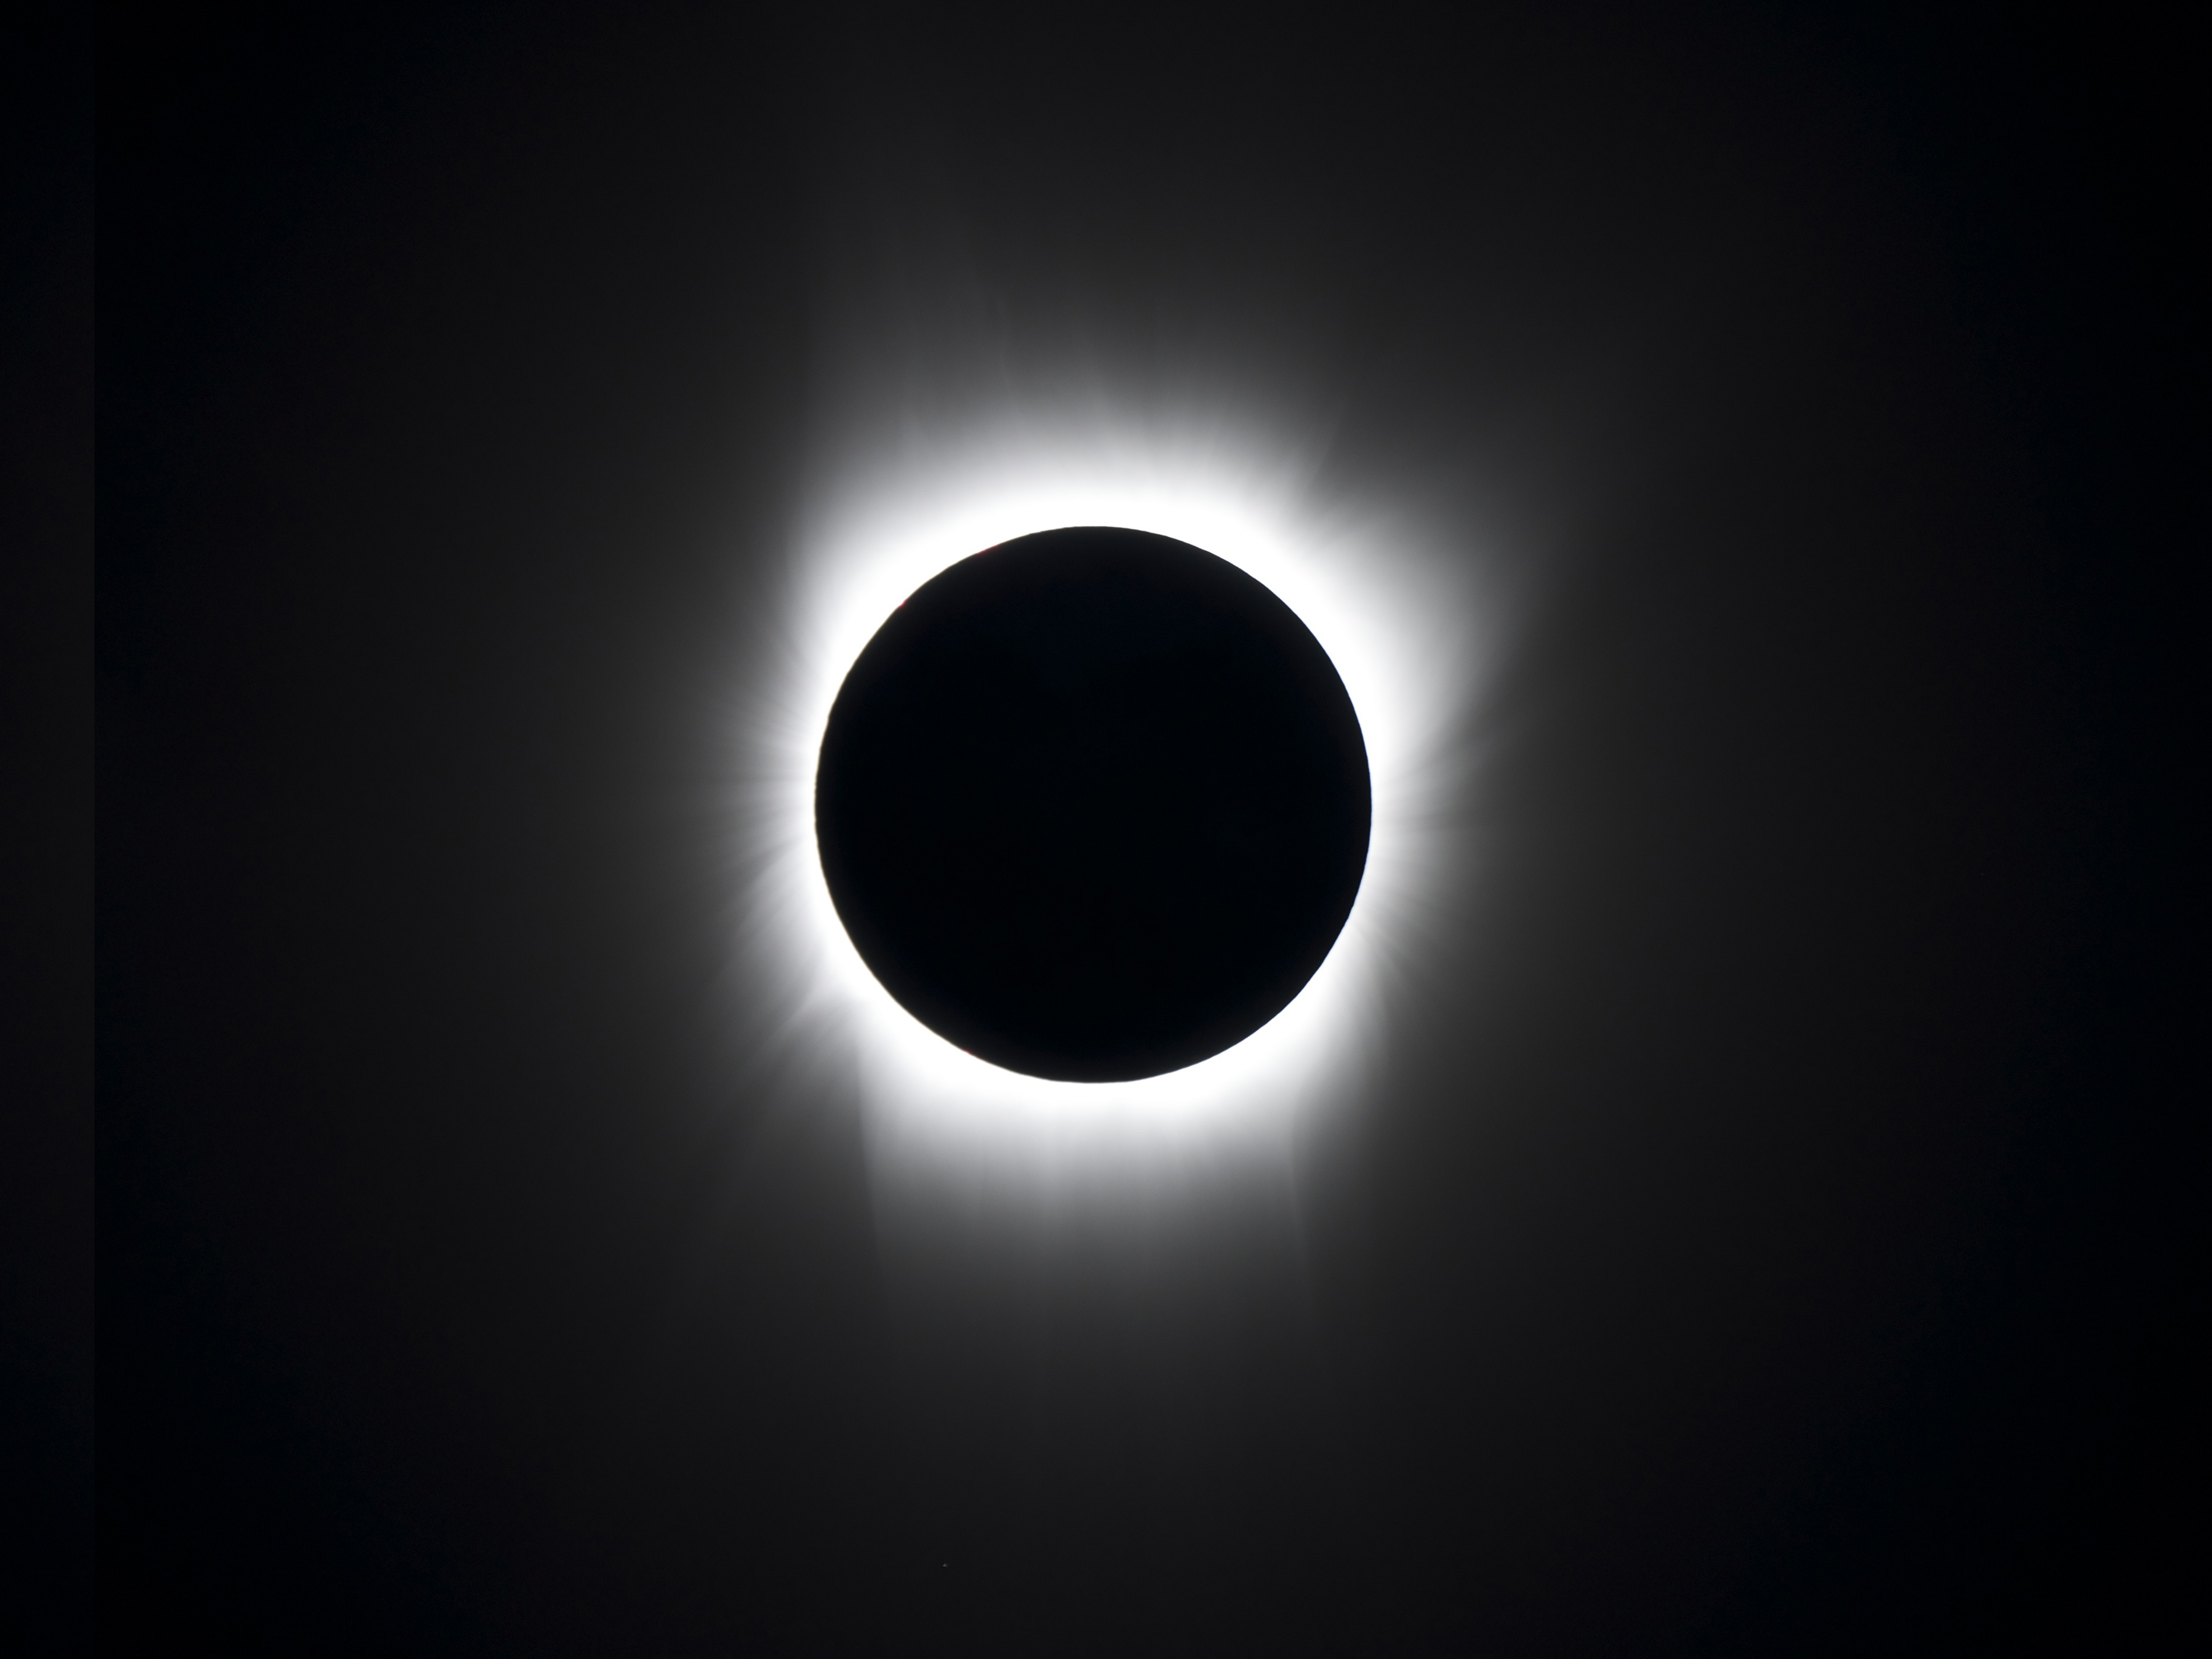 houston podcast episode 7 total solar eclipse america